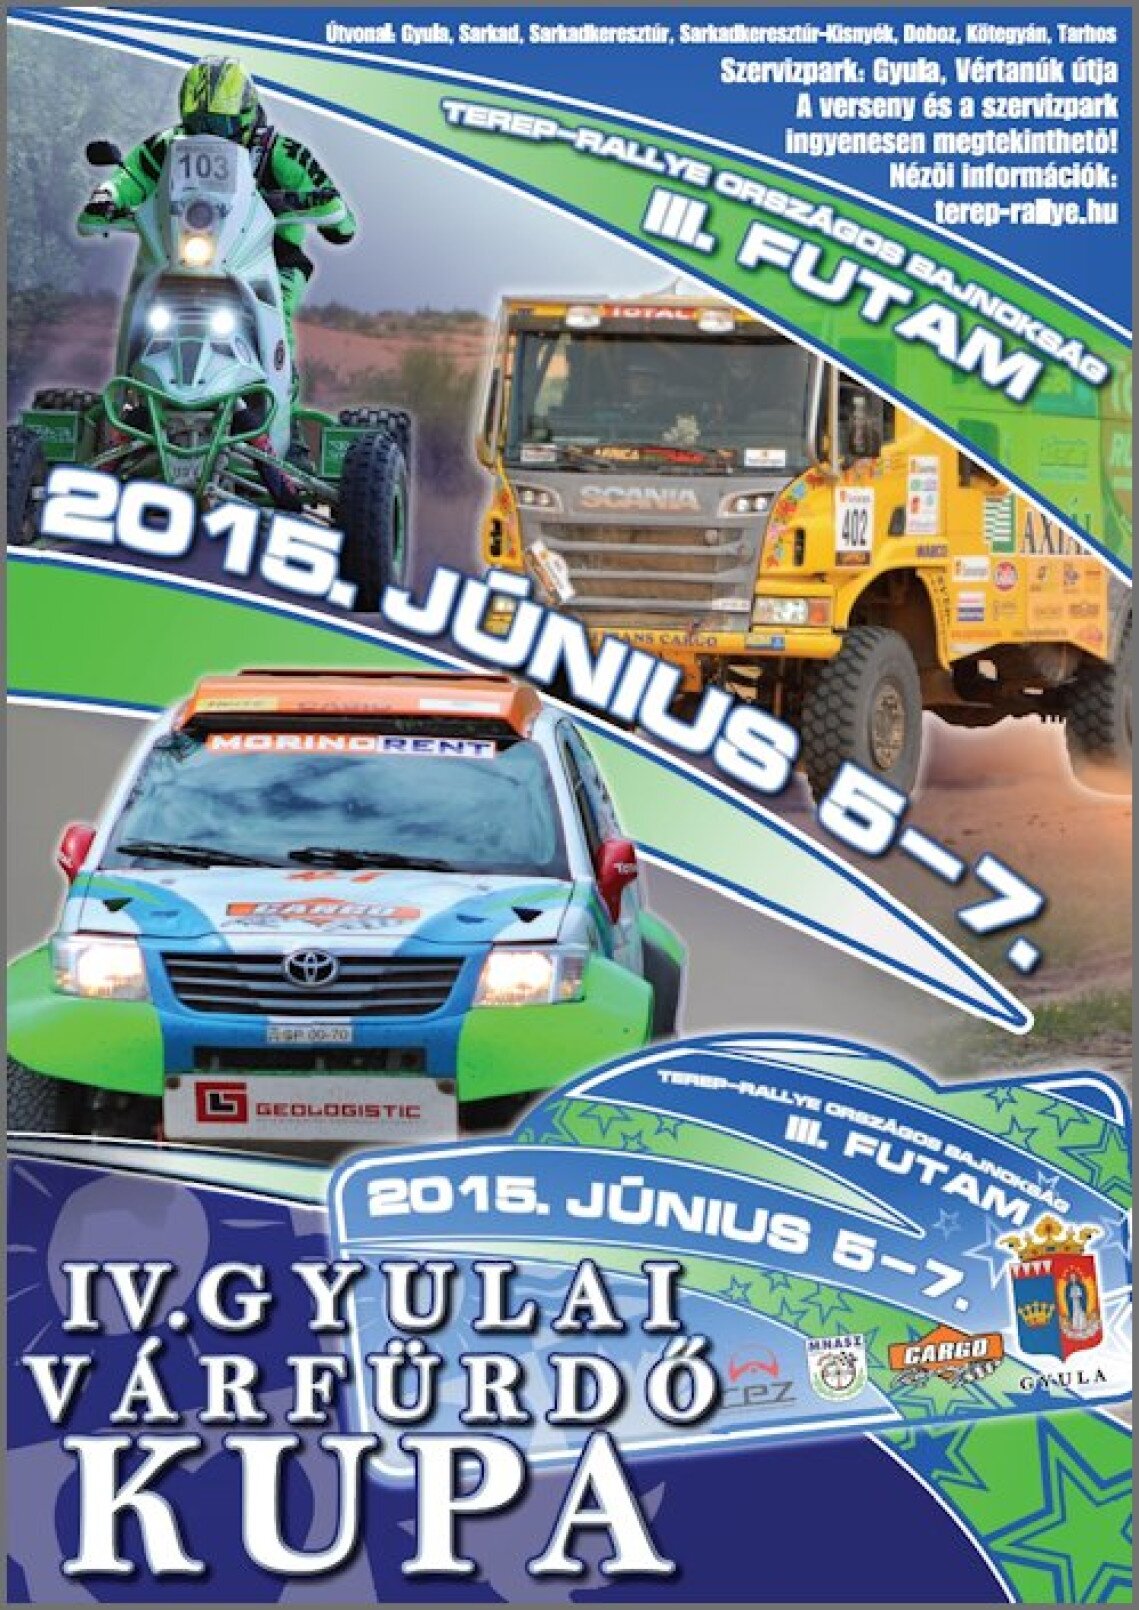 gyulai-varfurdo-kupa-terep-rallye-plakat-01.jpg